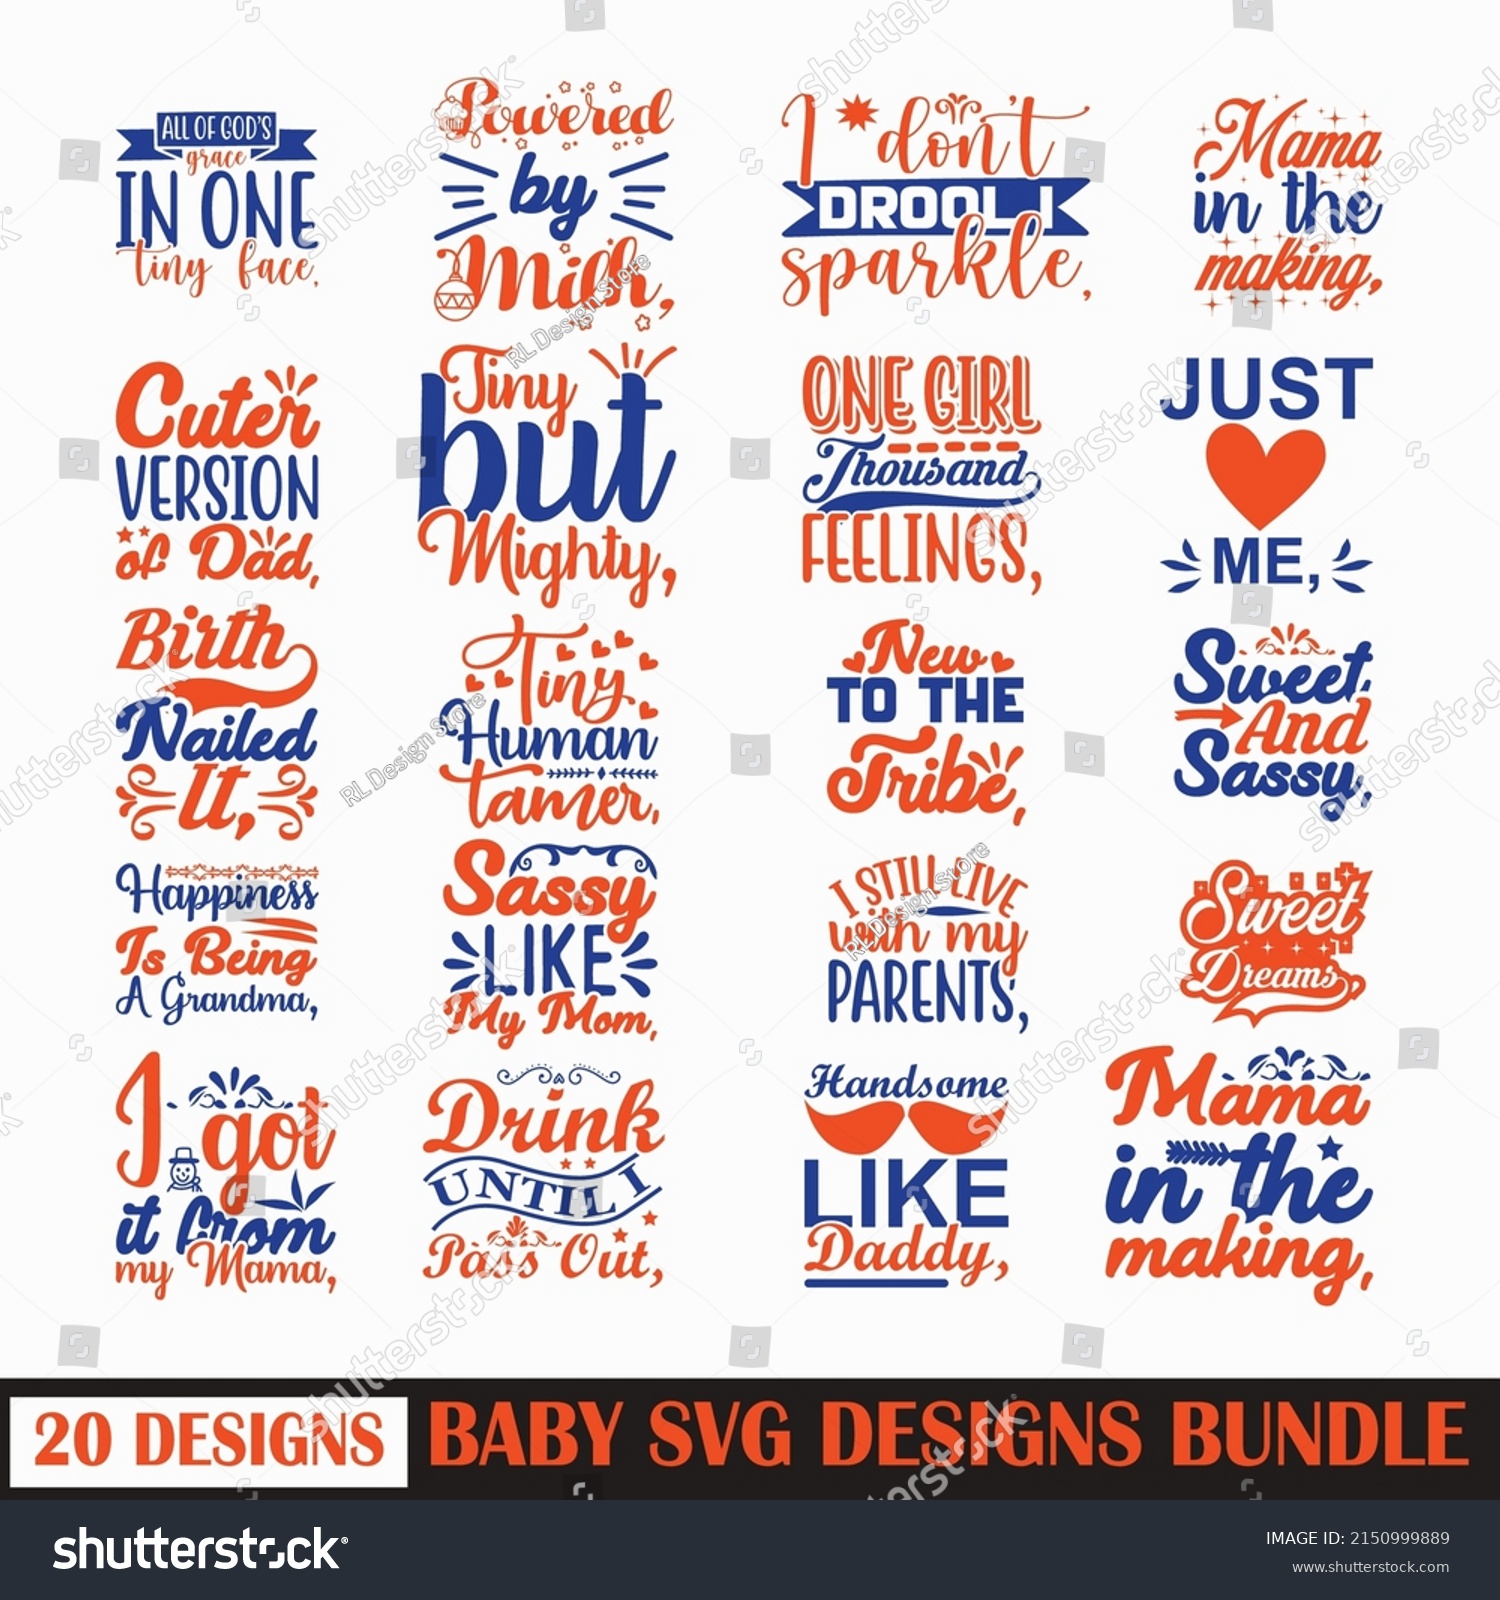 SVG of Baby Quotes SVG Designs Bundle. Baby  quotes SVG cut files bundle, Baby  quotes t shirt designs bundle, Quotes about Family  cut files, funny eps files,  boy onesie  bundle.  girl ones svg